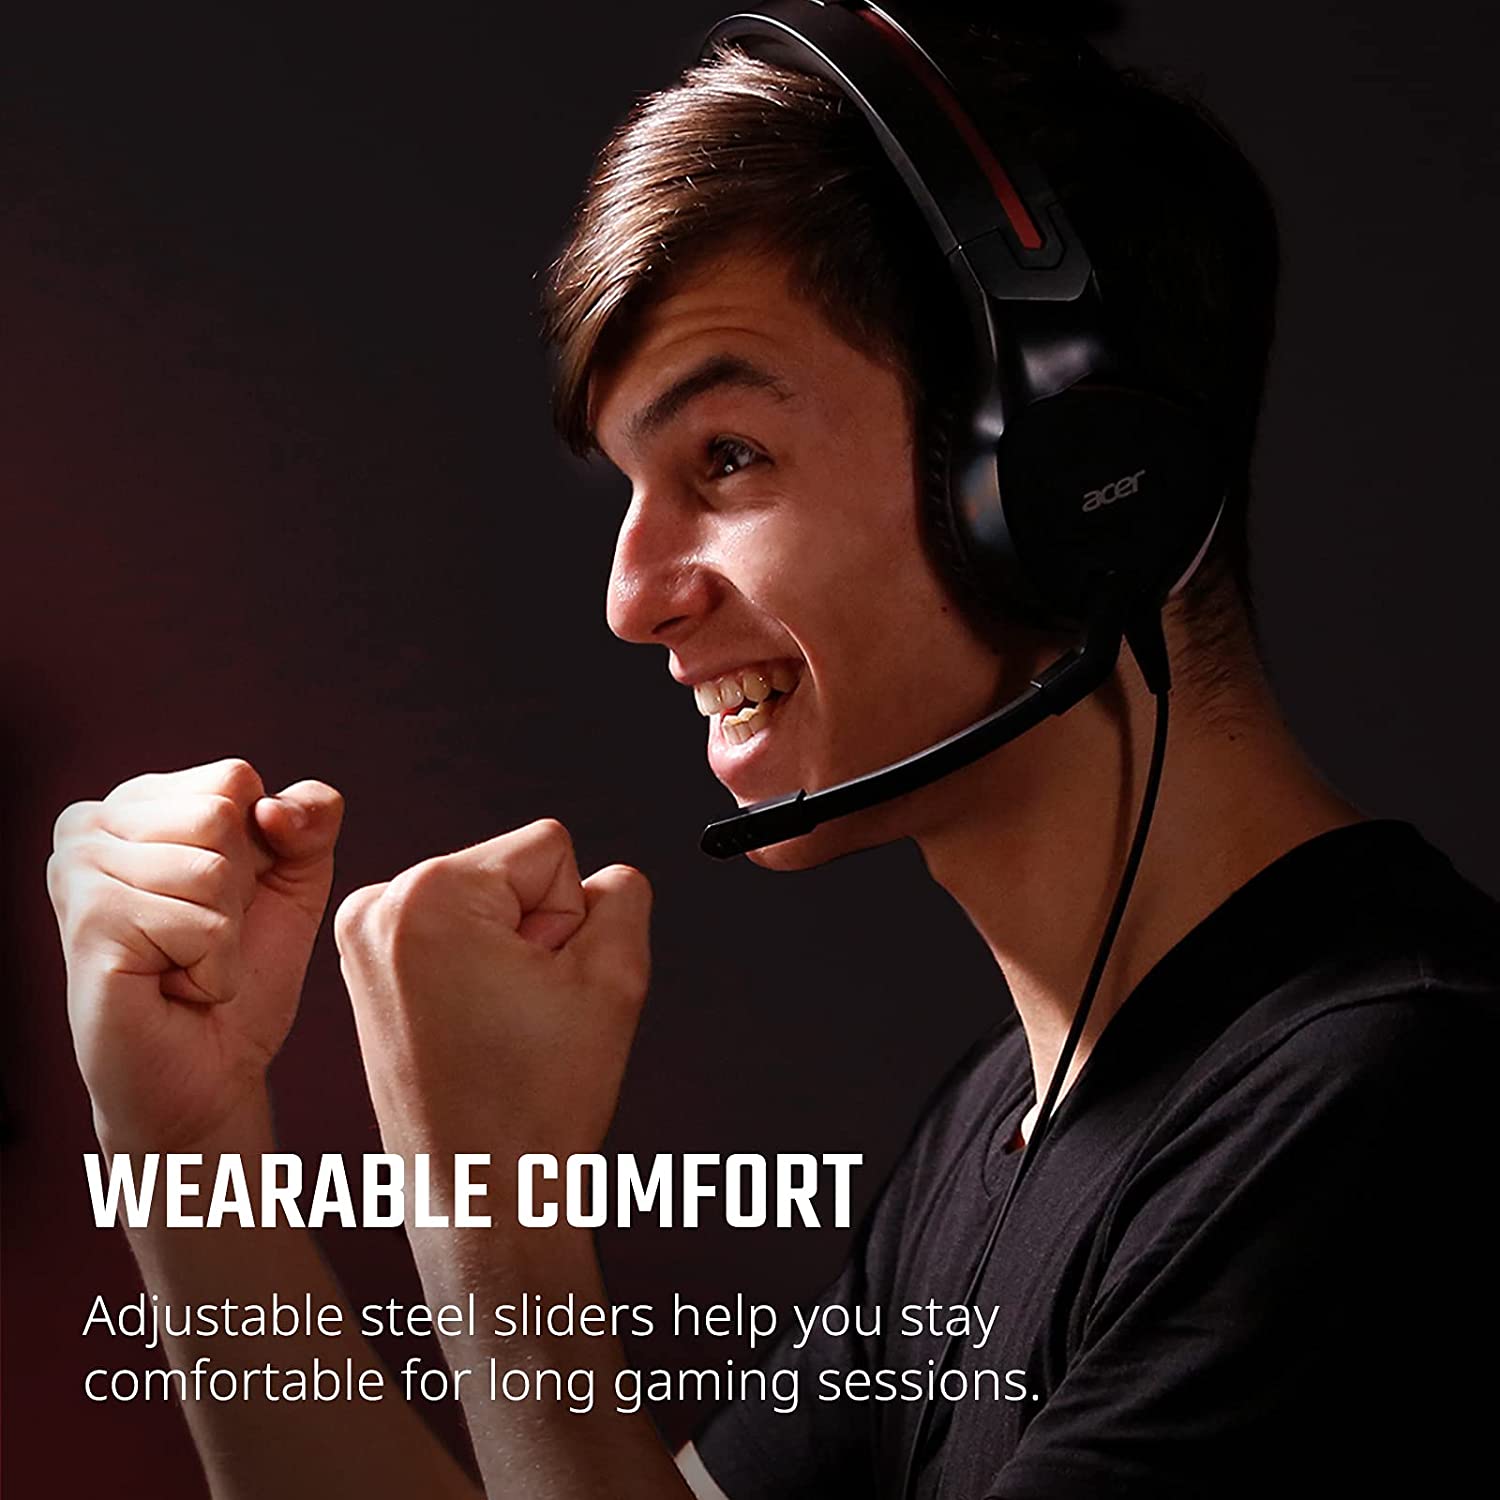 Acer Nitro Gaming Headset with Flexible Omnidirectional Mic, Adjustable Headband Nitro Headset - Dealtargets.com